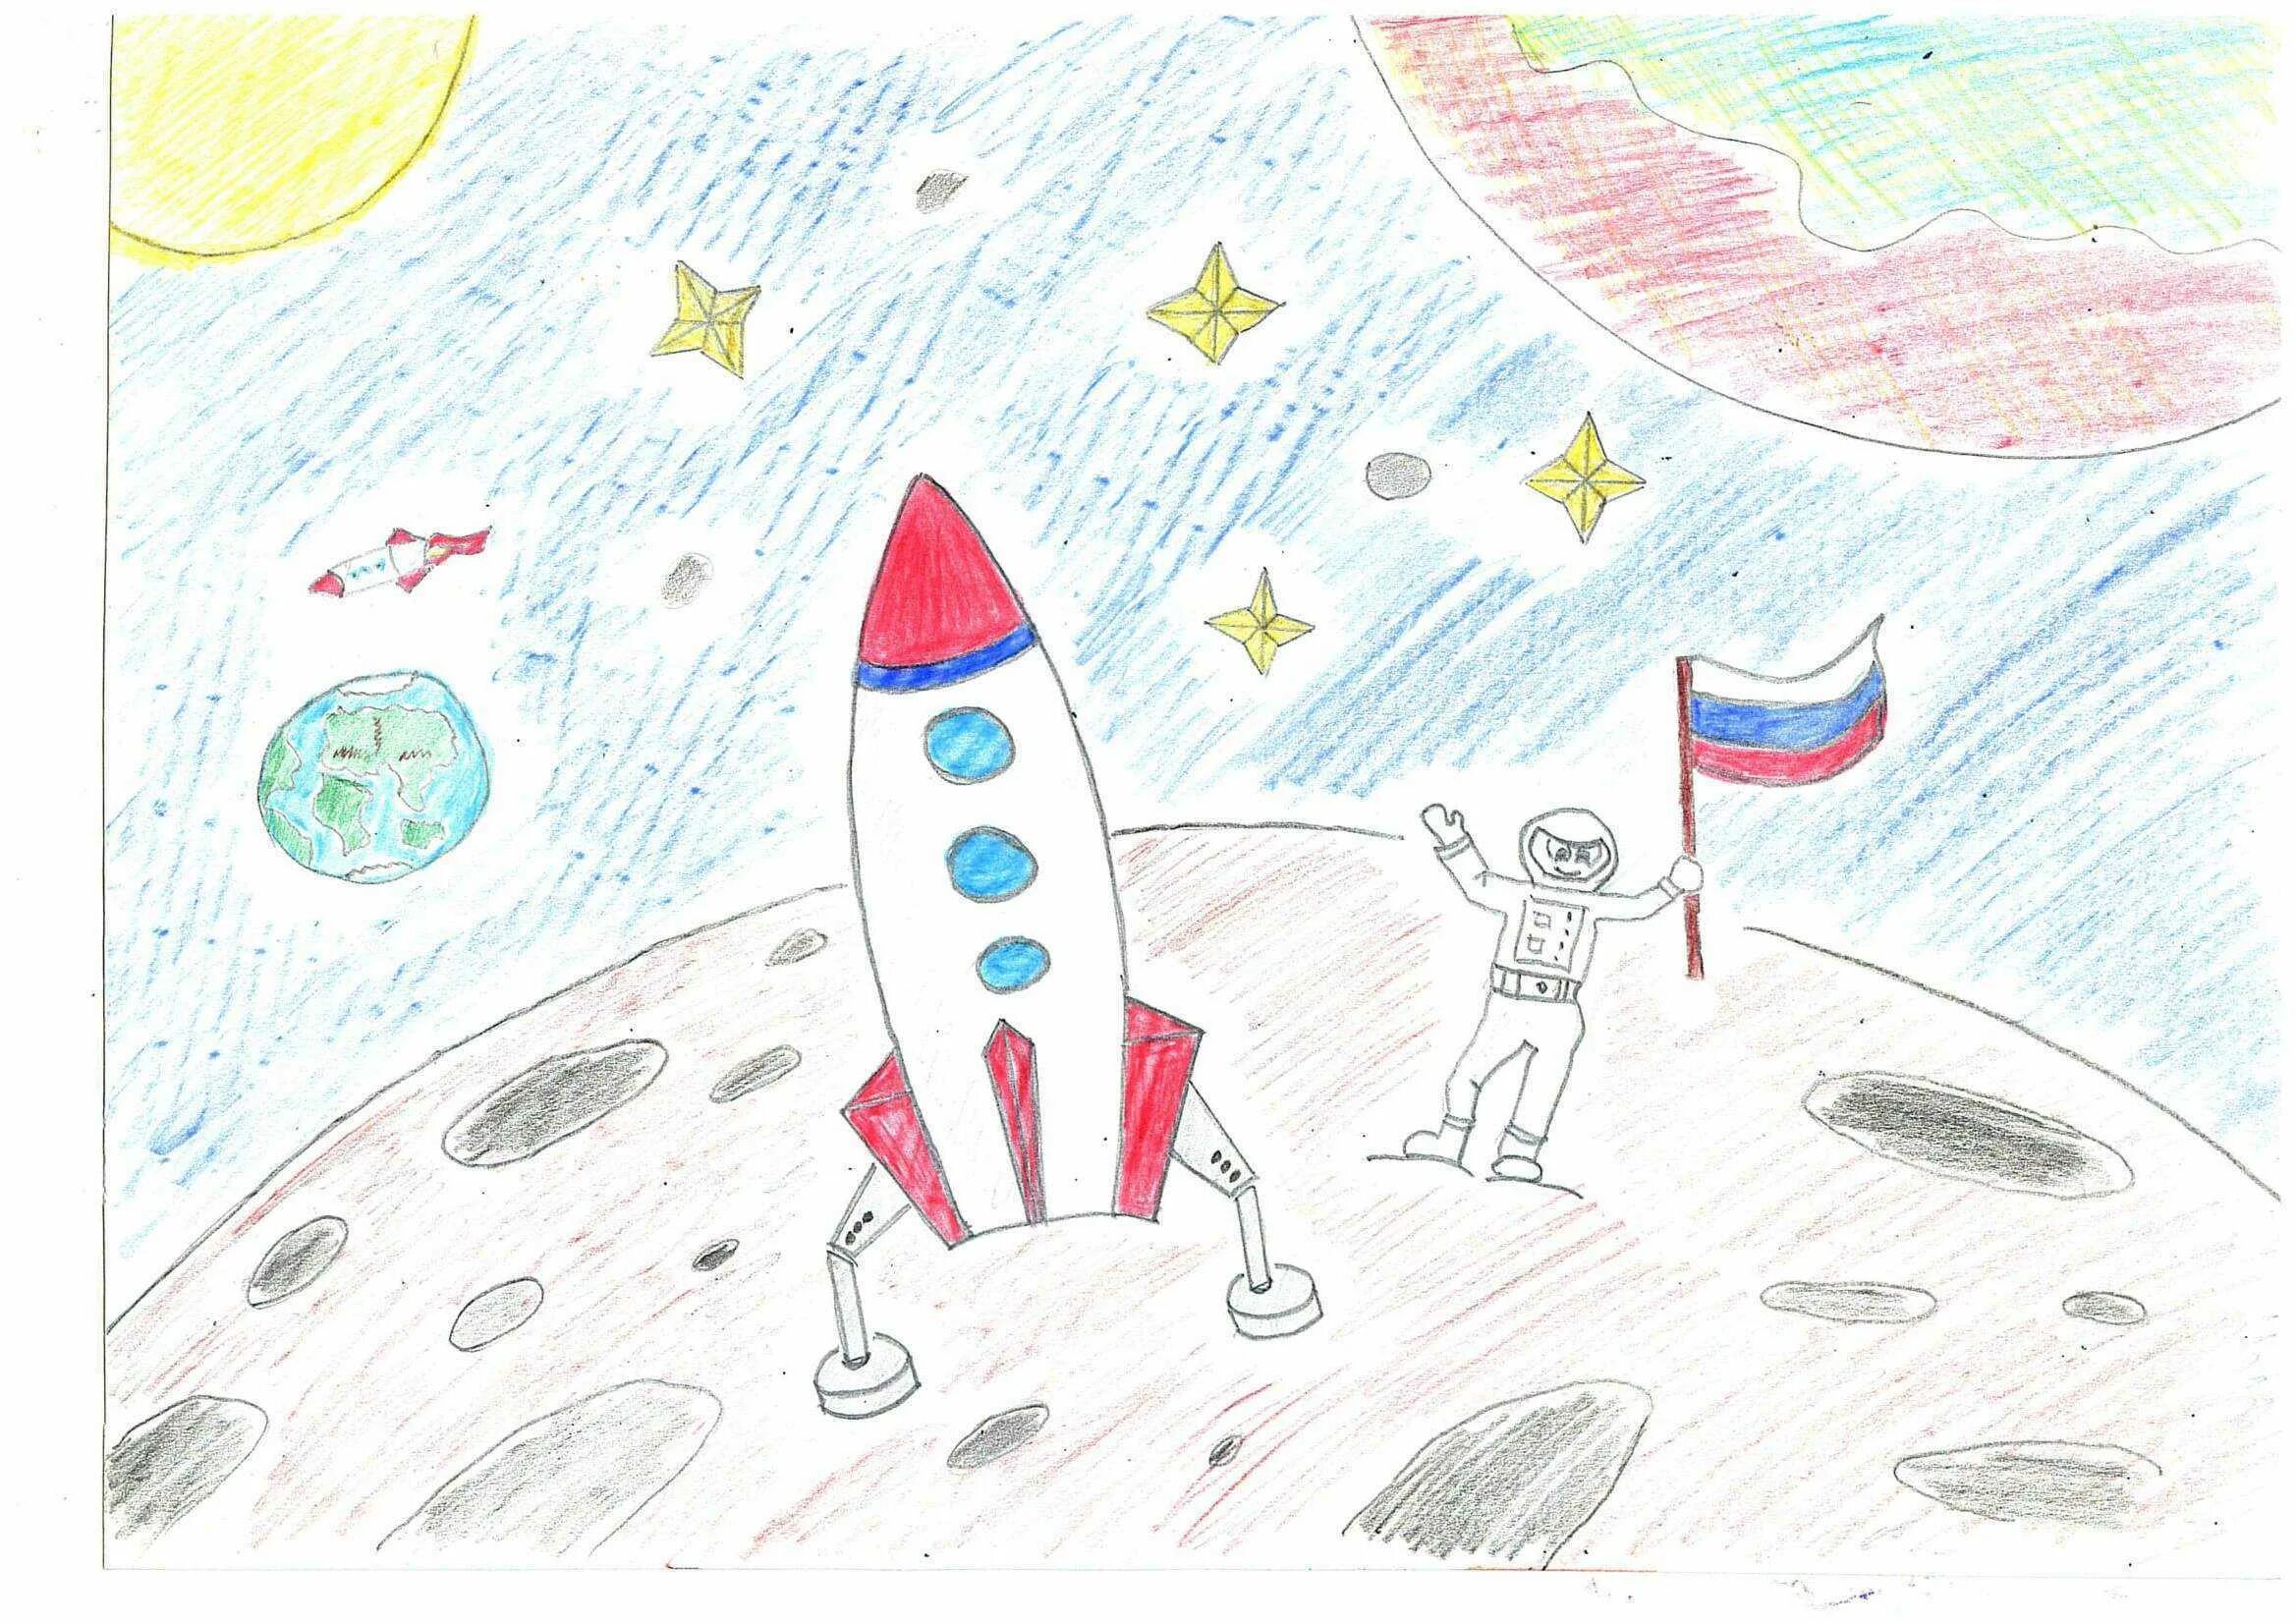 Рисунок на тему космонавтики 1 класс. Рисунок на тему космос. Рисунок на космическую тему. Рисование ко Дню космонавтики. Рисунок ко Дню космонавтики.